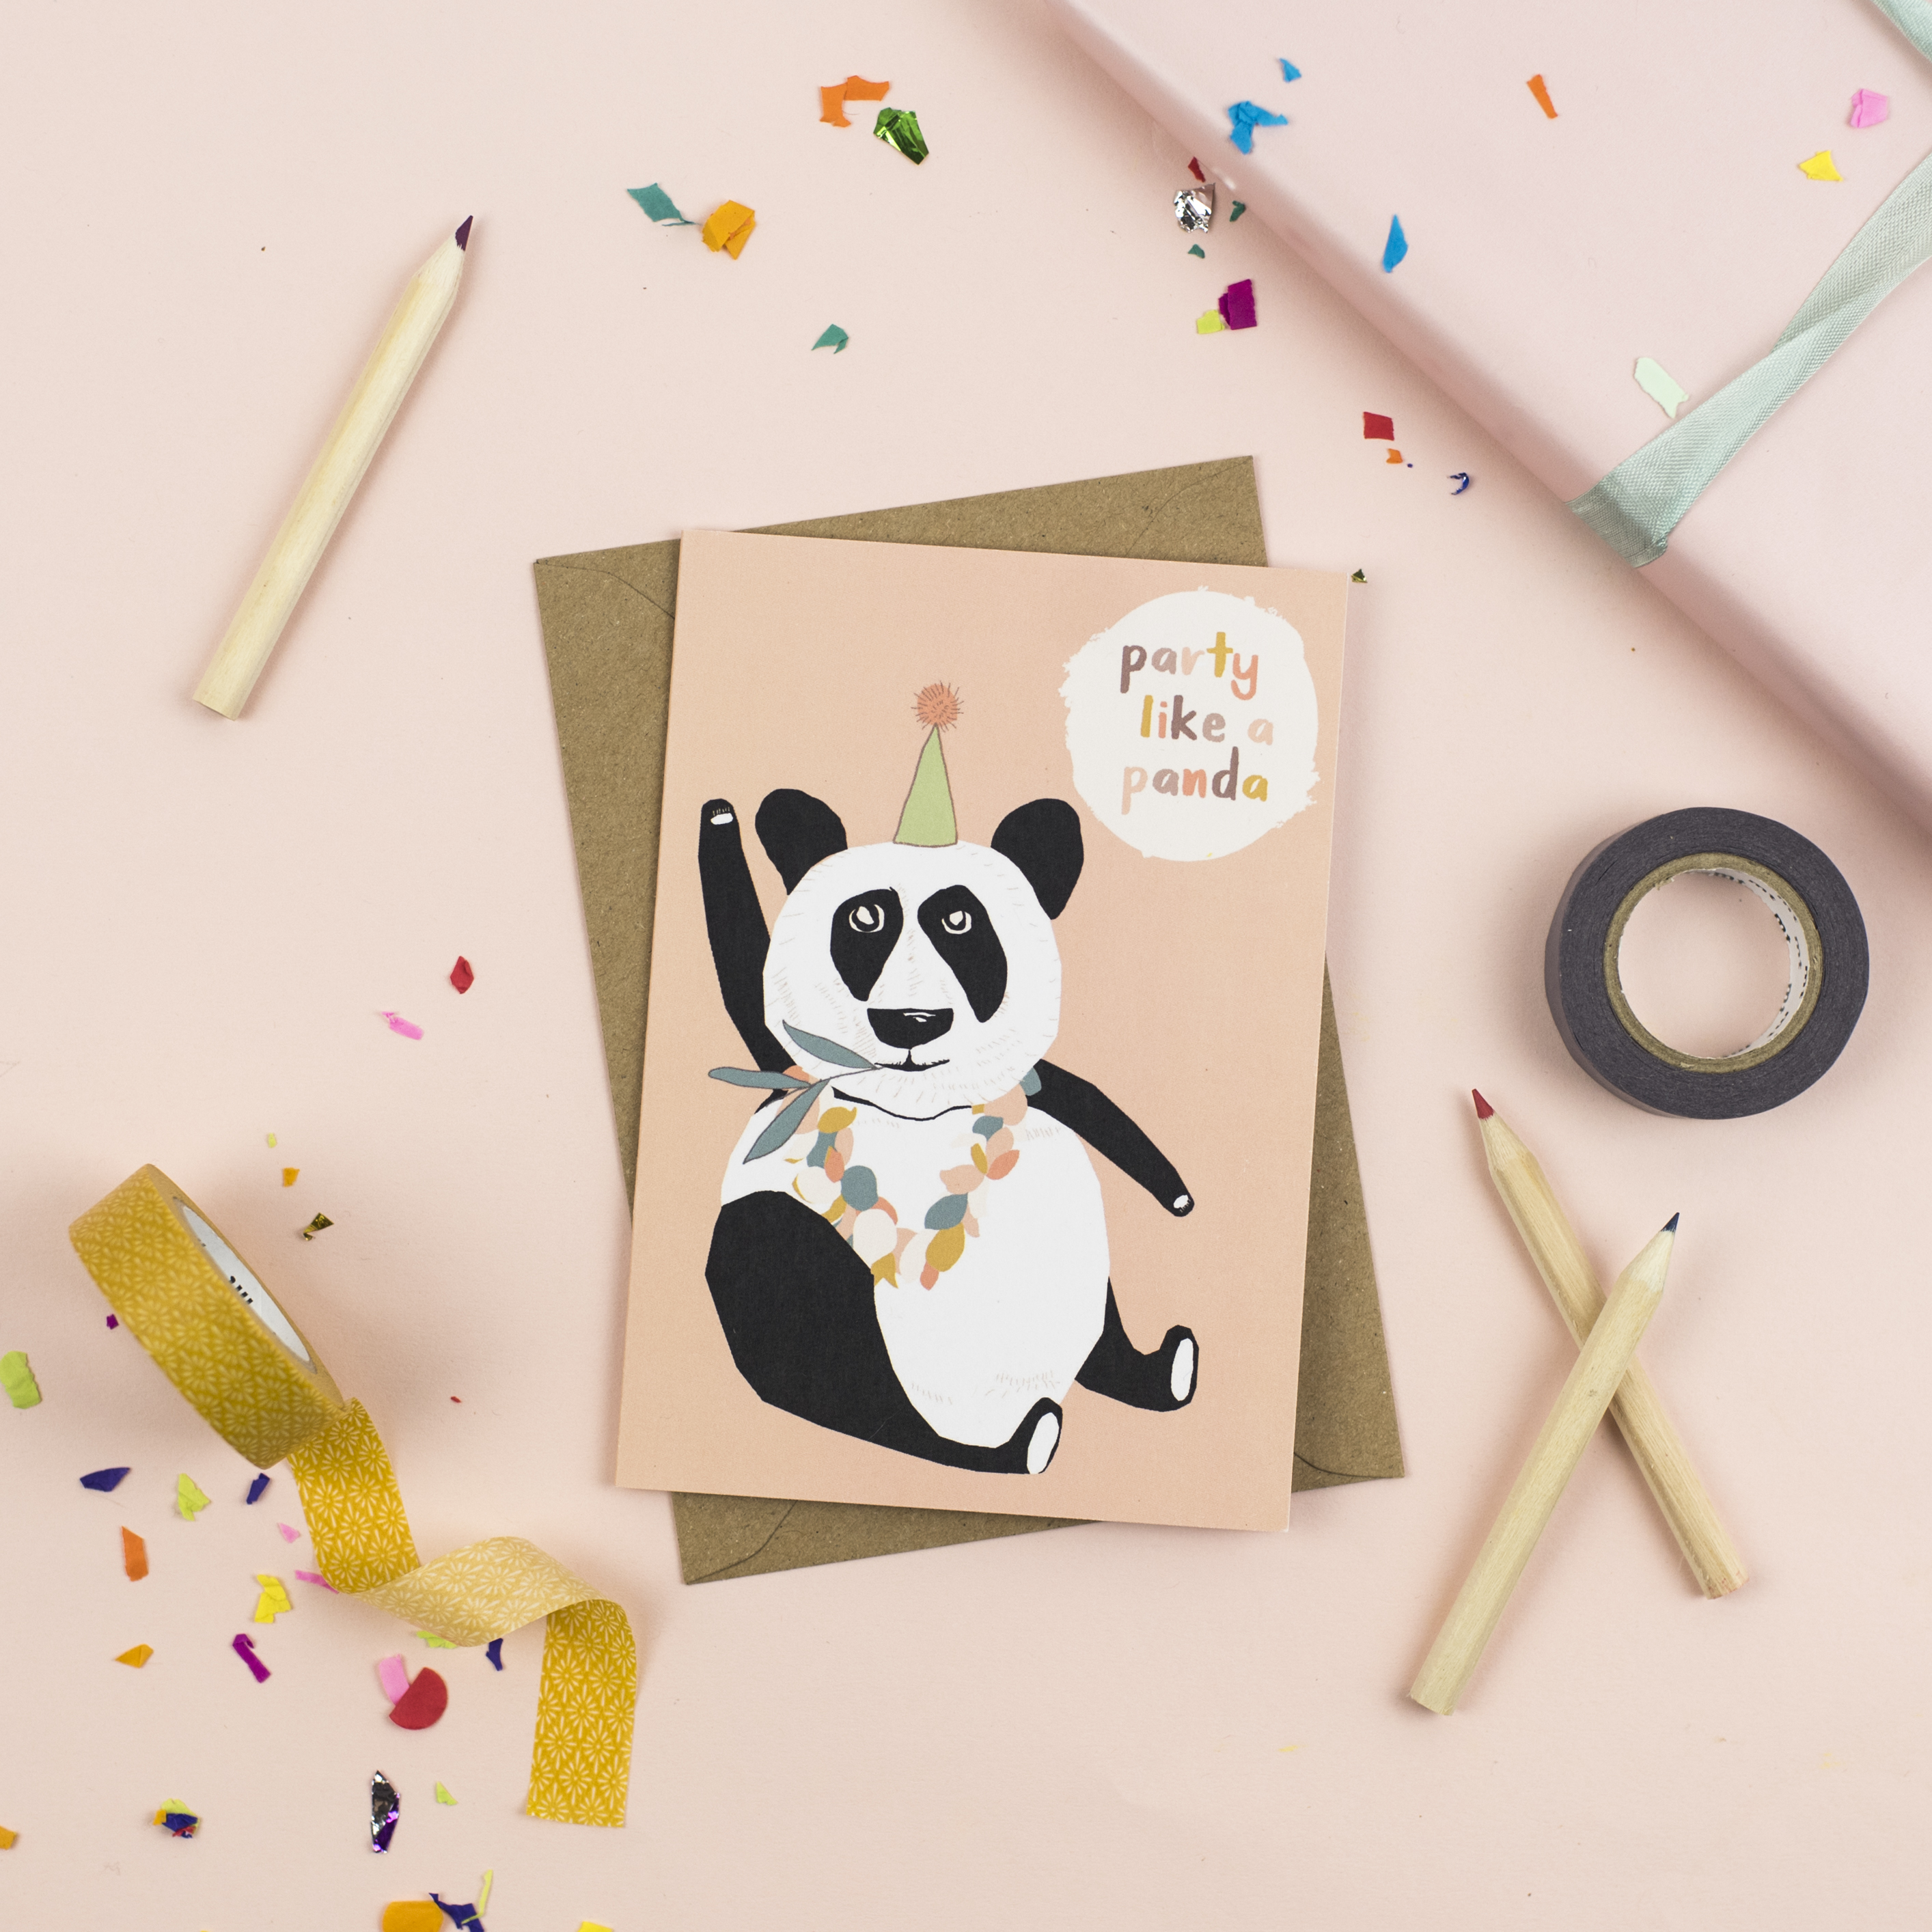 Party like a panda Birthday card